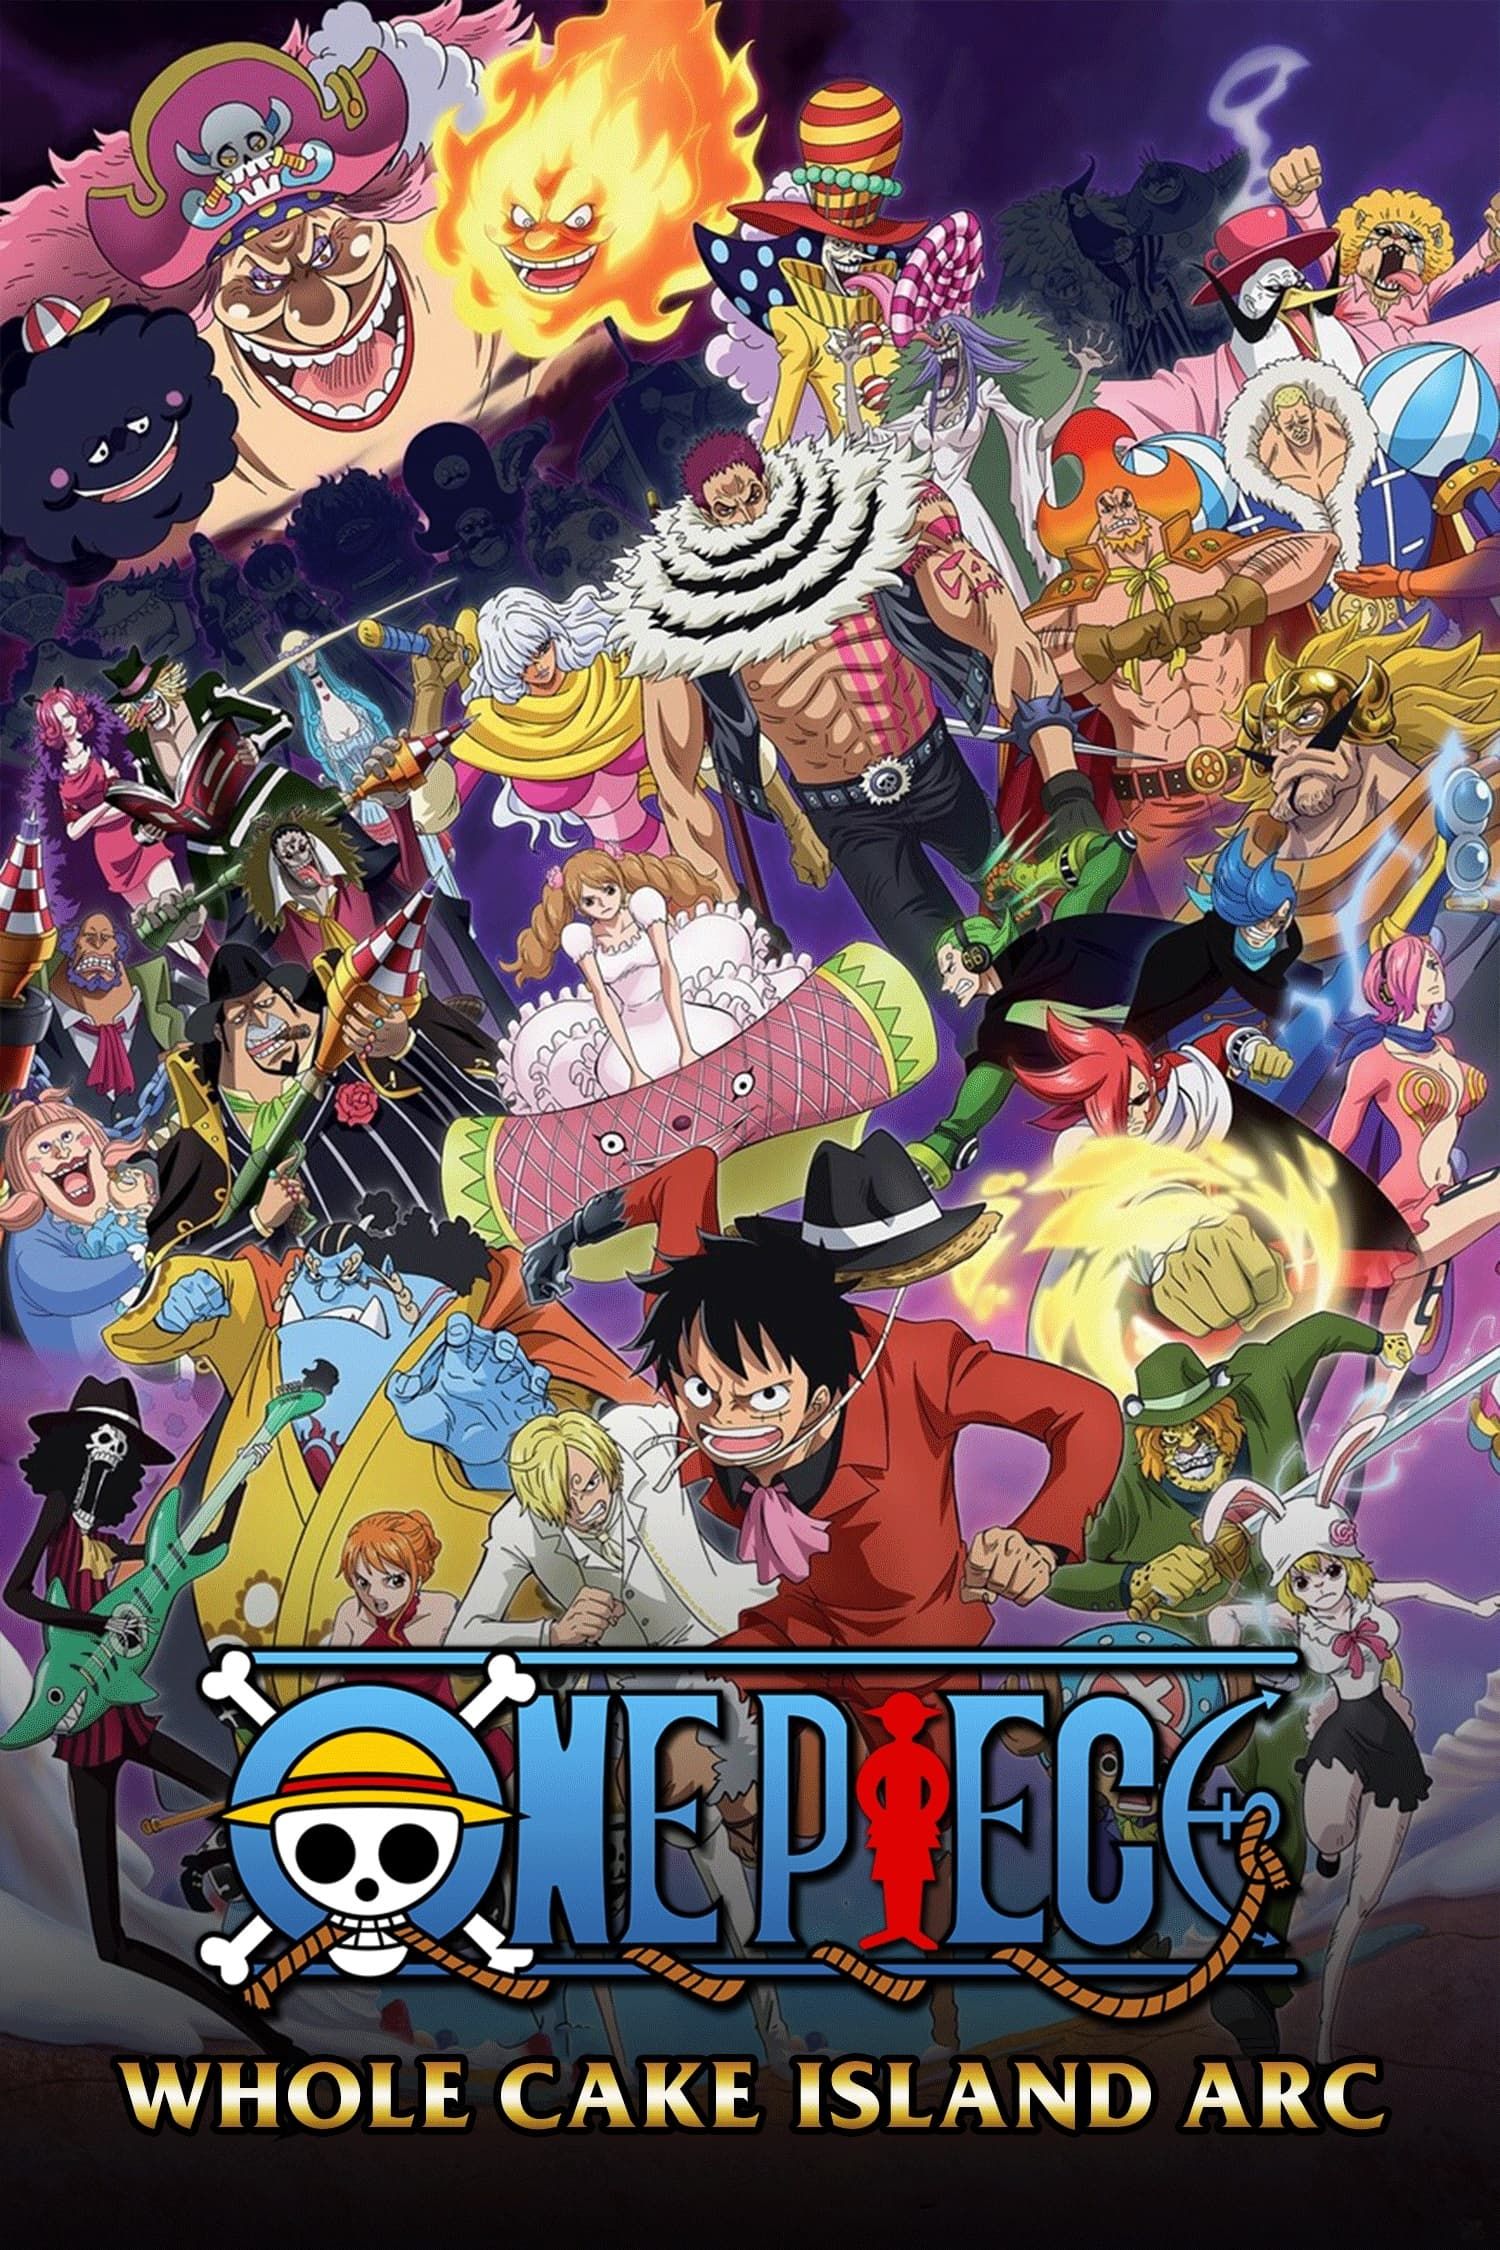 One Piece na Pluto TV